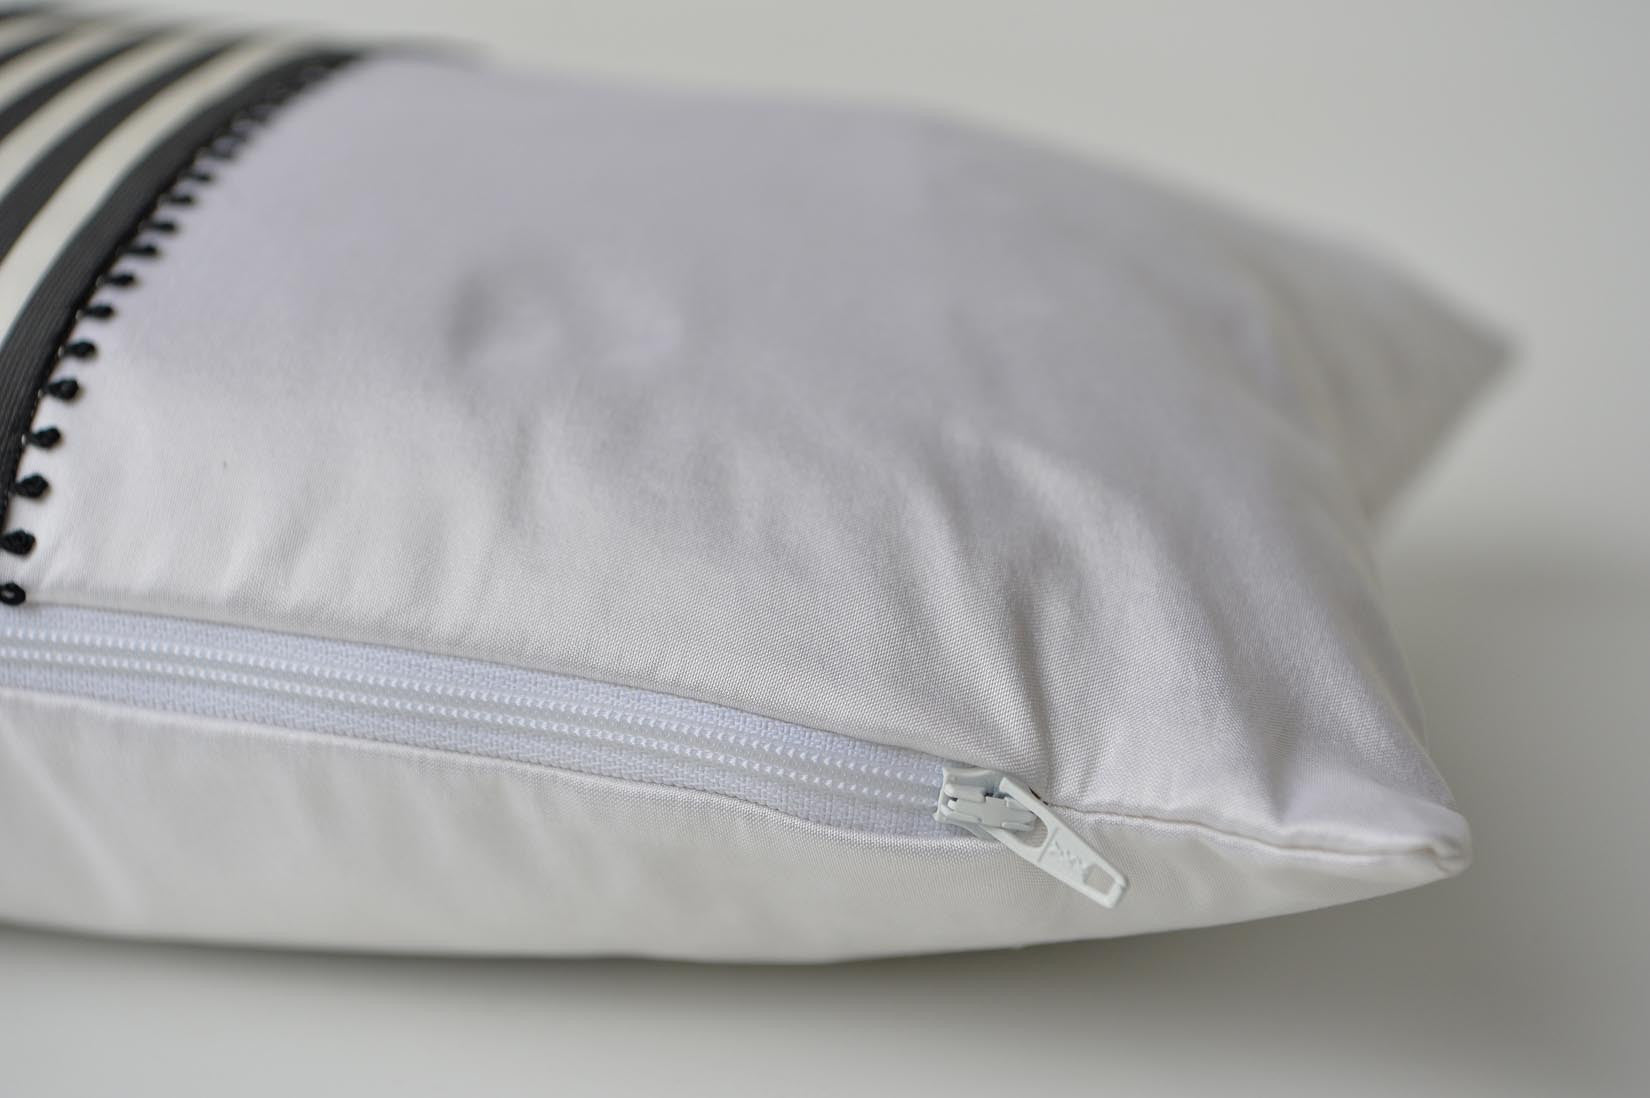 "Picot" White silk cushion - MyBilletDoux.com